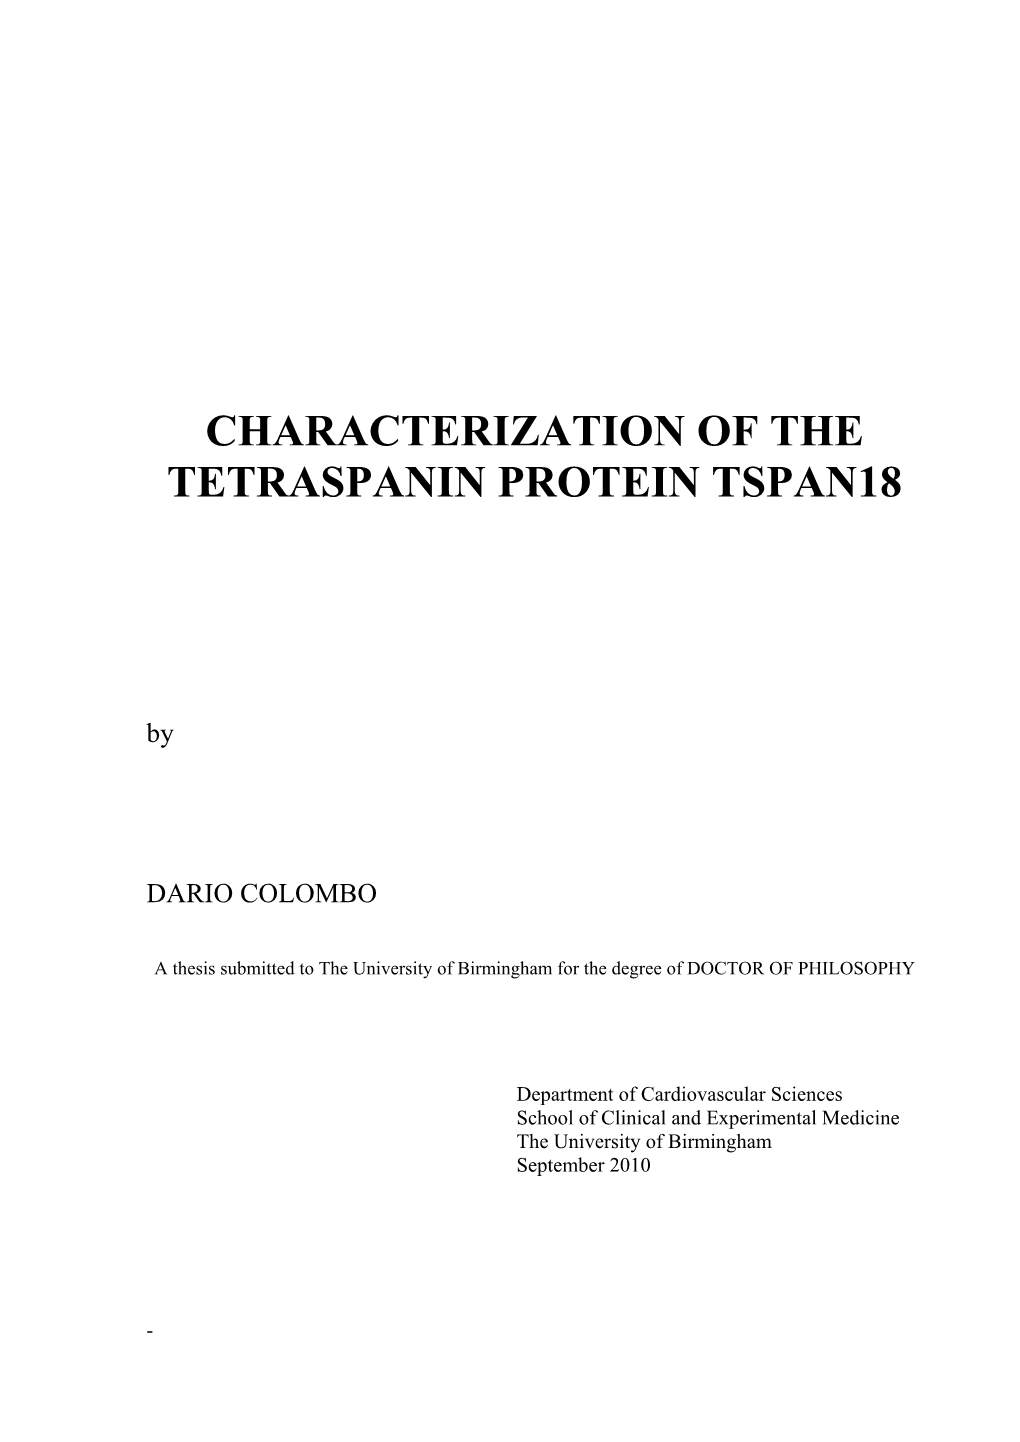 Characterization of the Tetraspanin Protein Tspan18